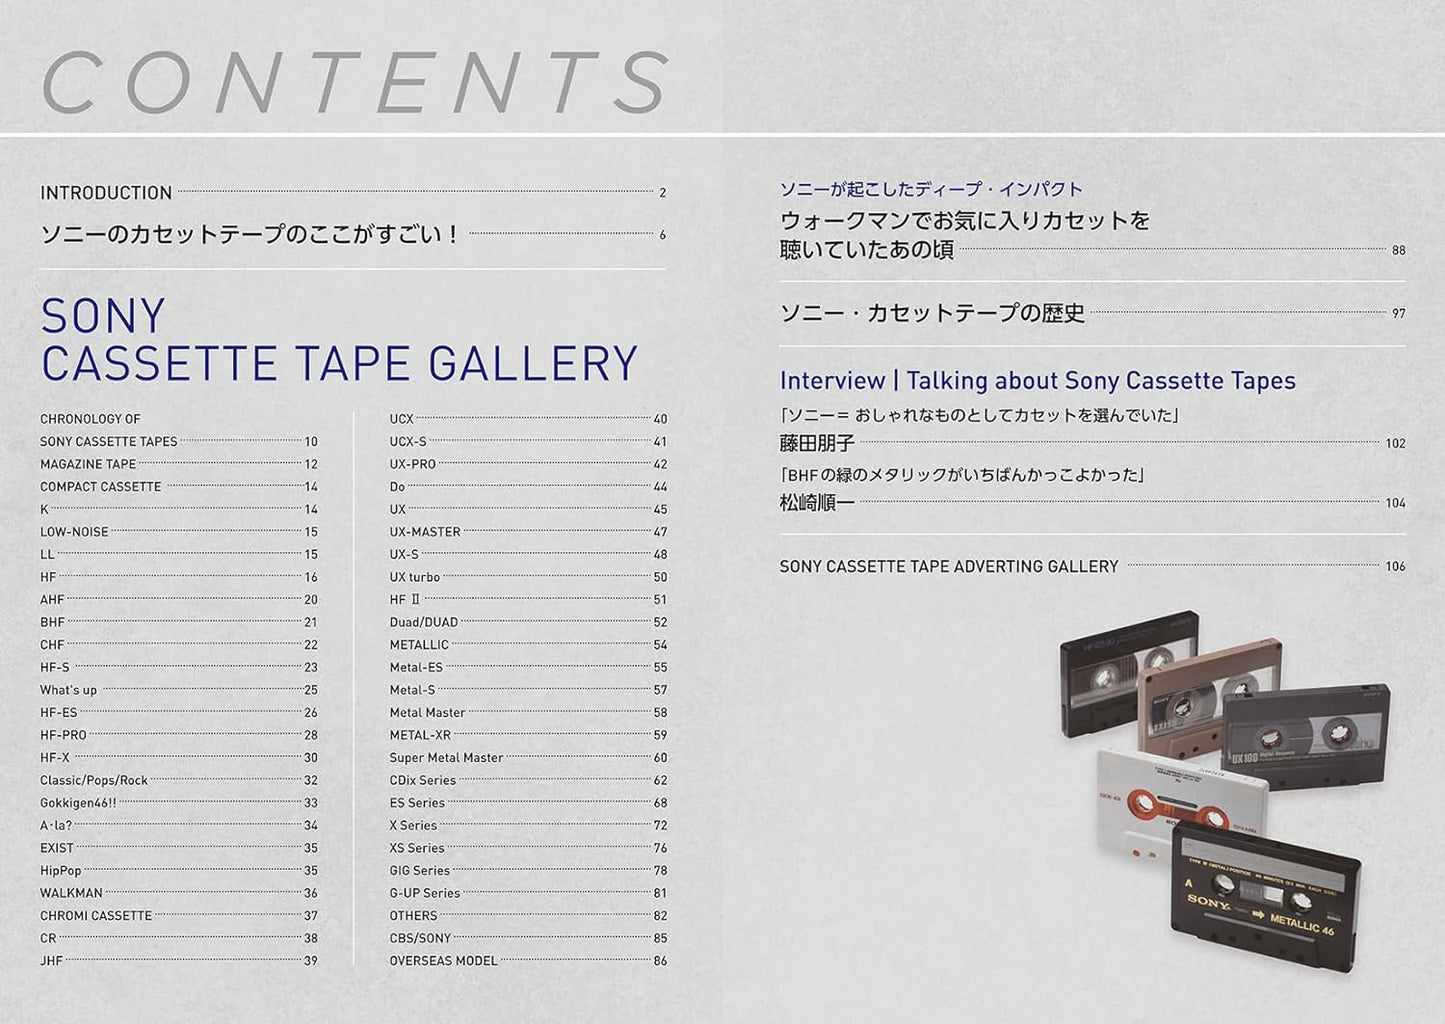 Sony Cassette Tape Maniacs 1966-2016